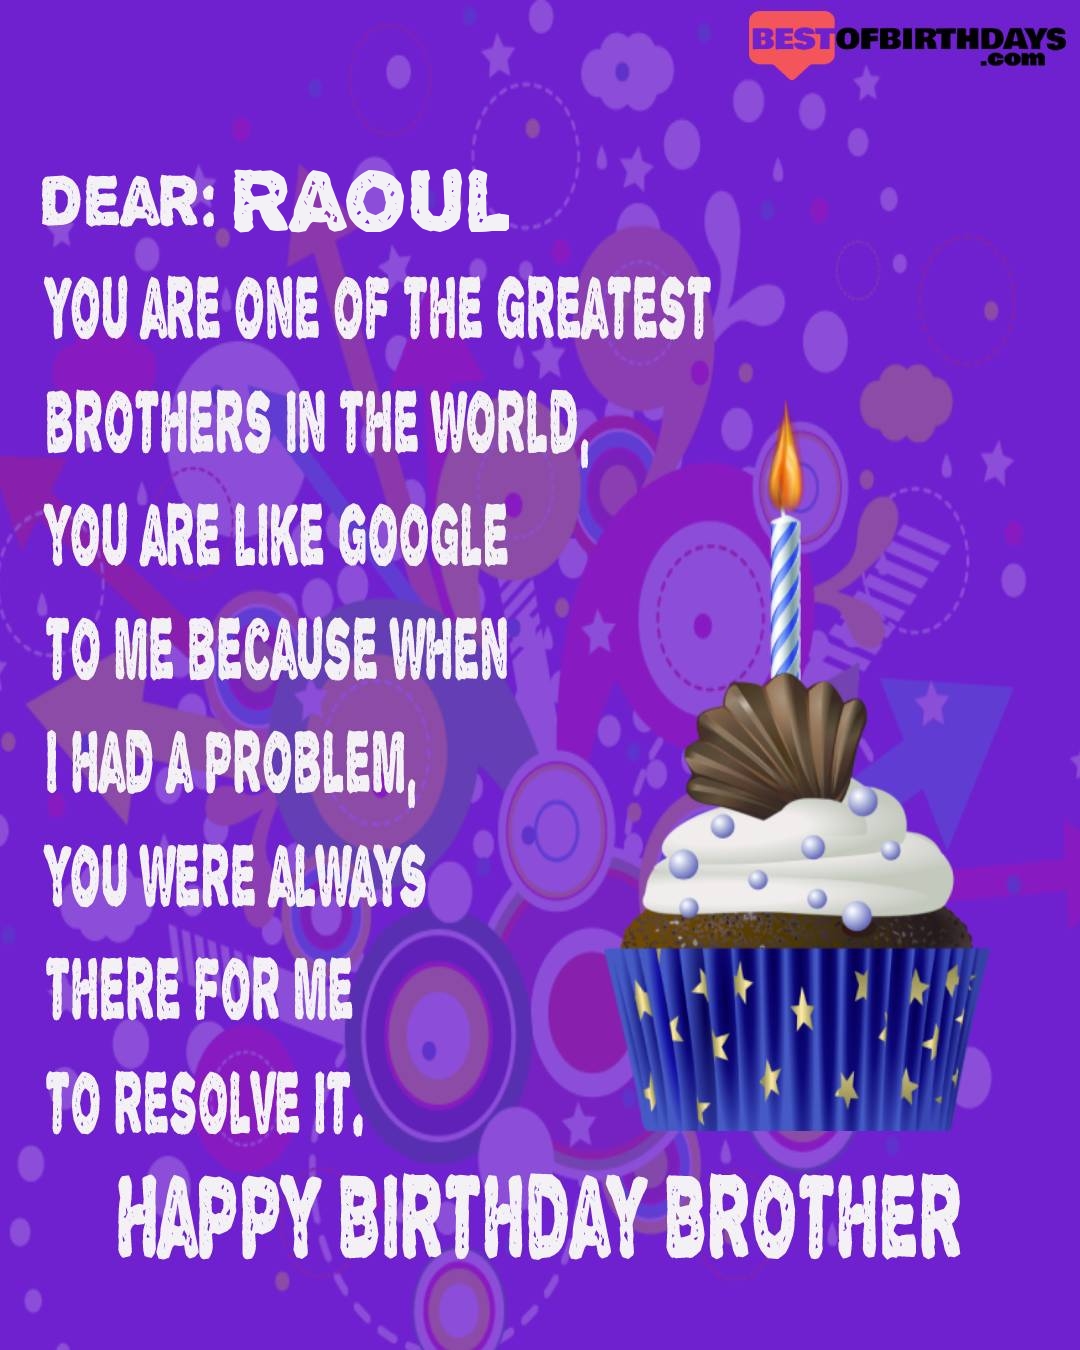 Happy birthday raoul bhai brother bro